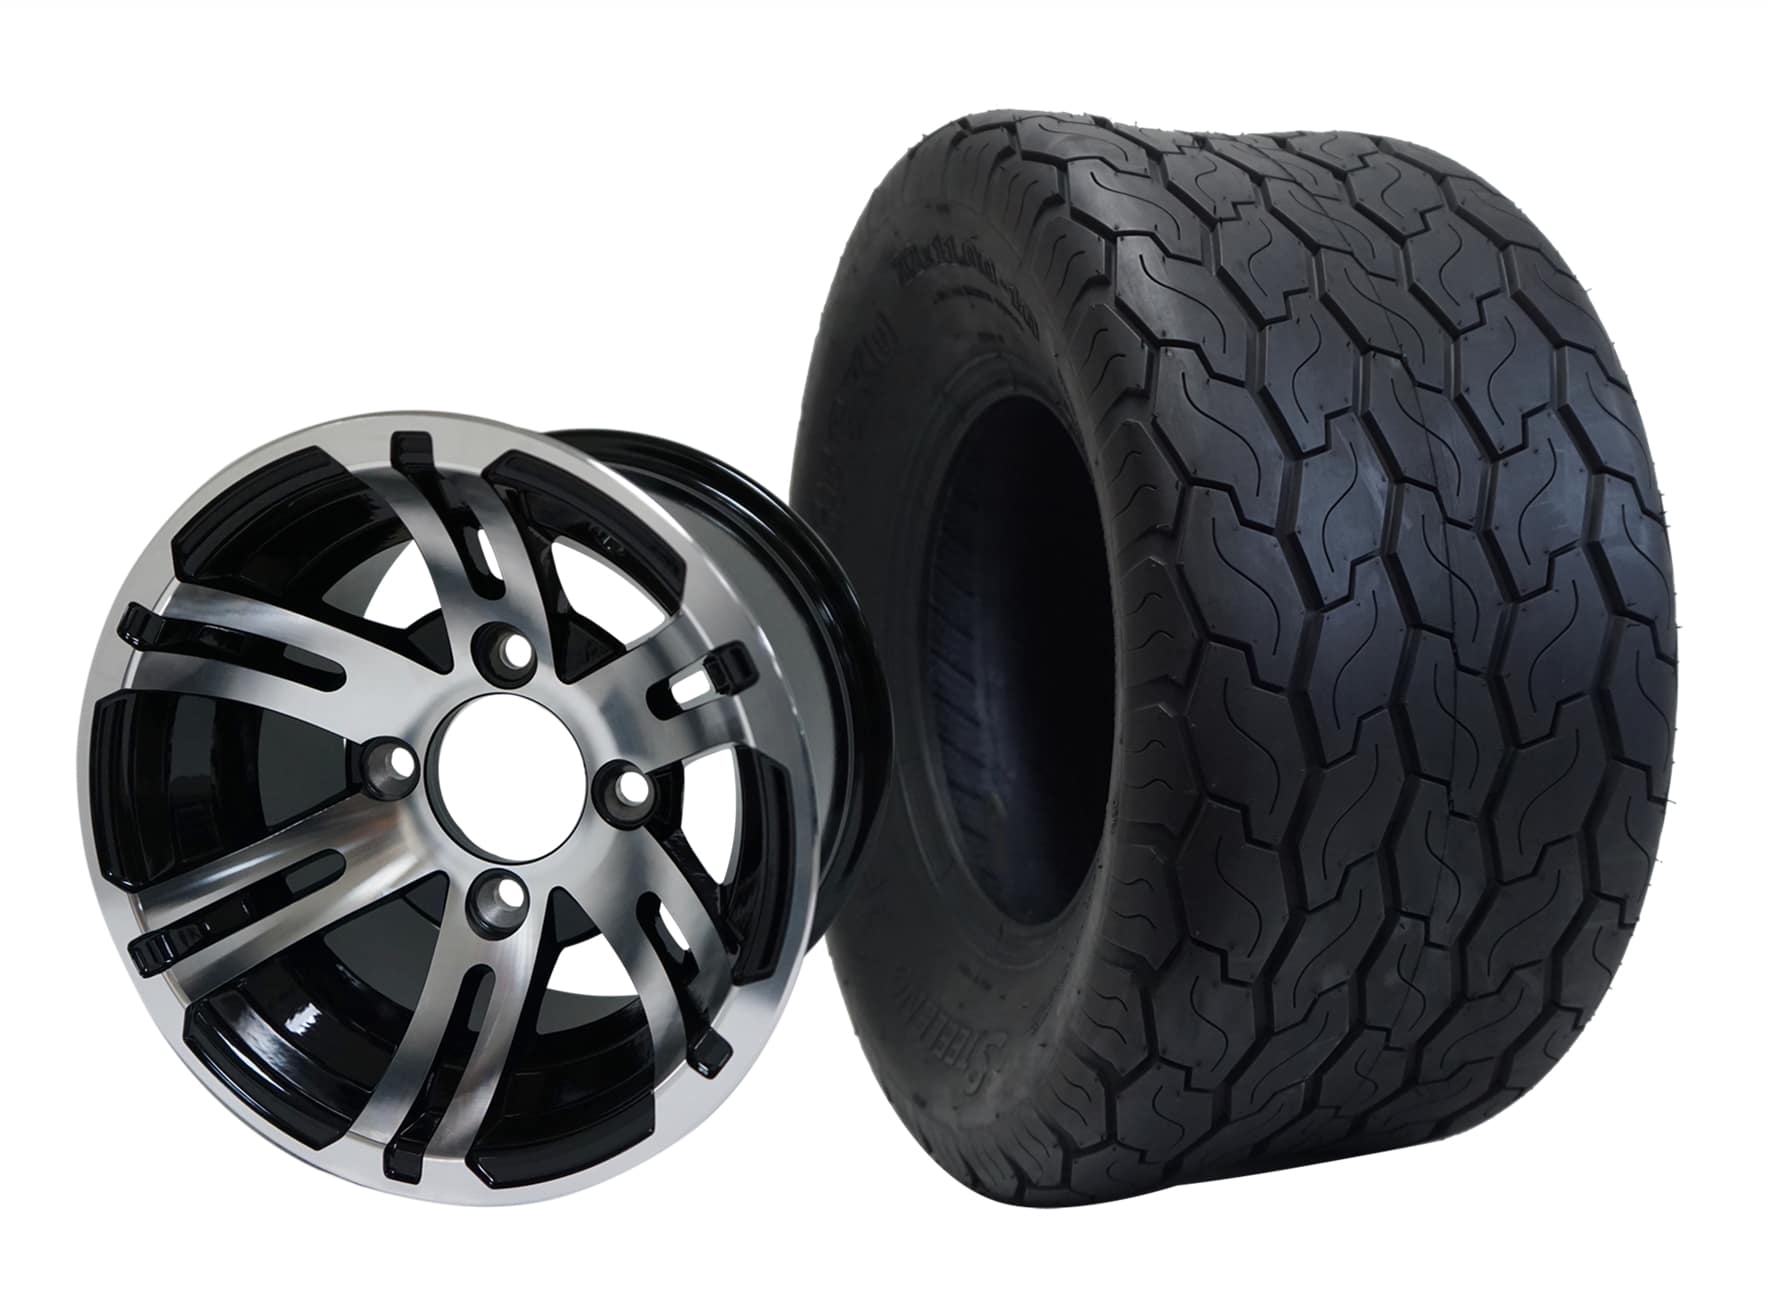 10" Bulldog Machined Black Wheel Aluminum Alloy & 18"x9"-10" Gecko All Terrain Tire x4